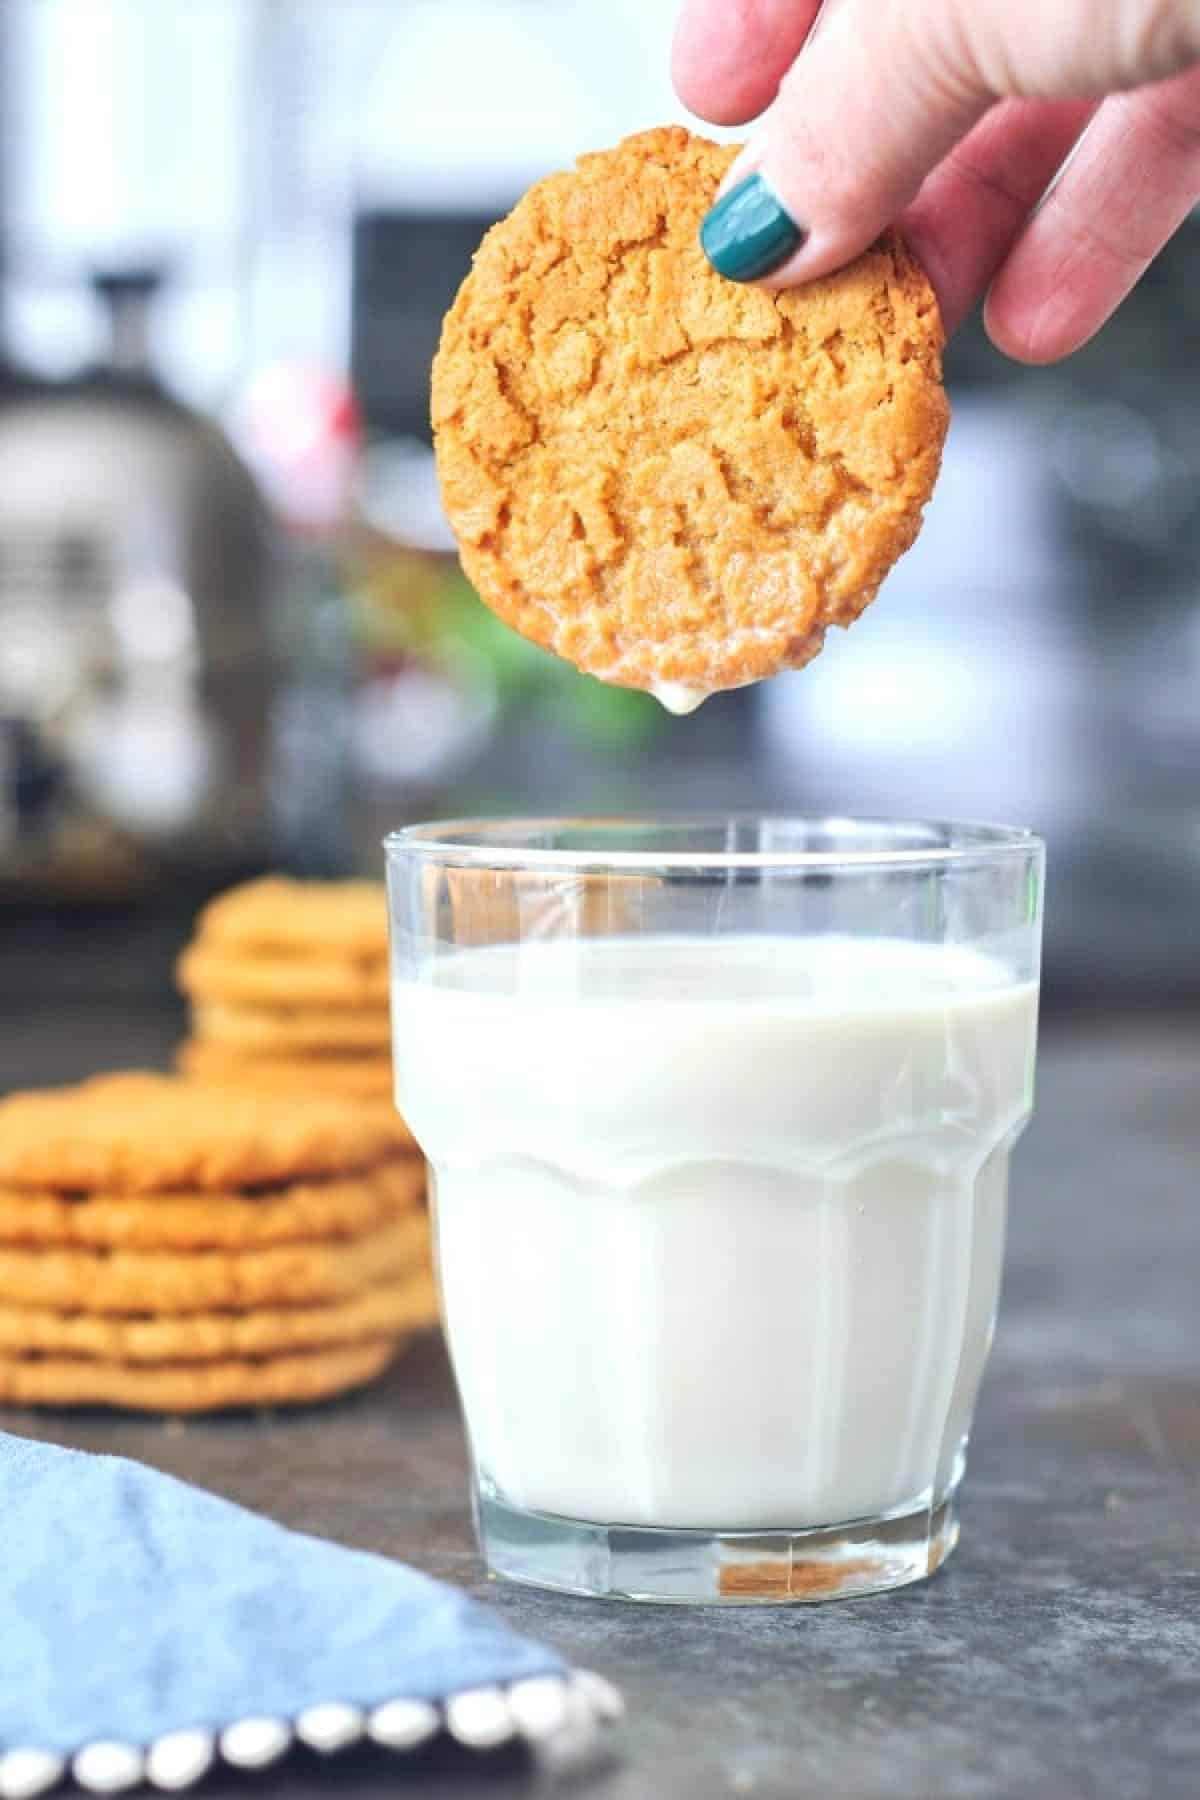 A hand dunking a flourless almond butter cookie into a glass of milk.